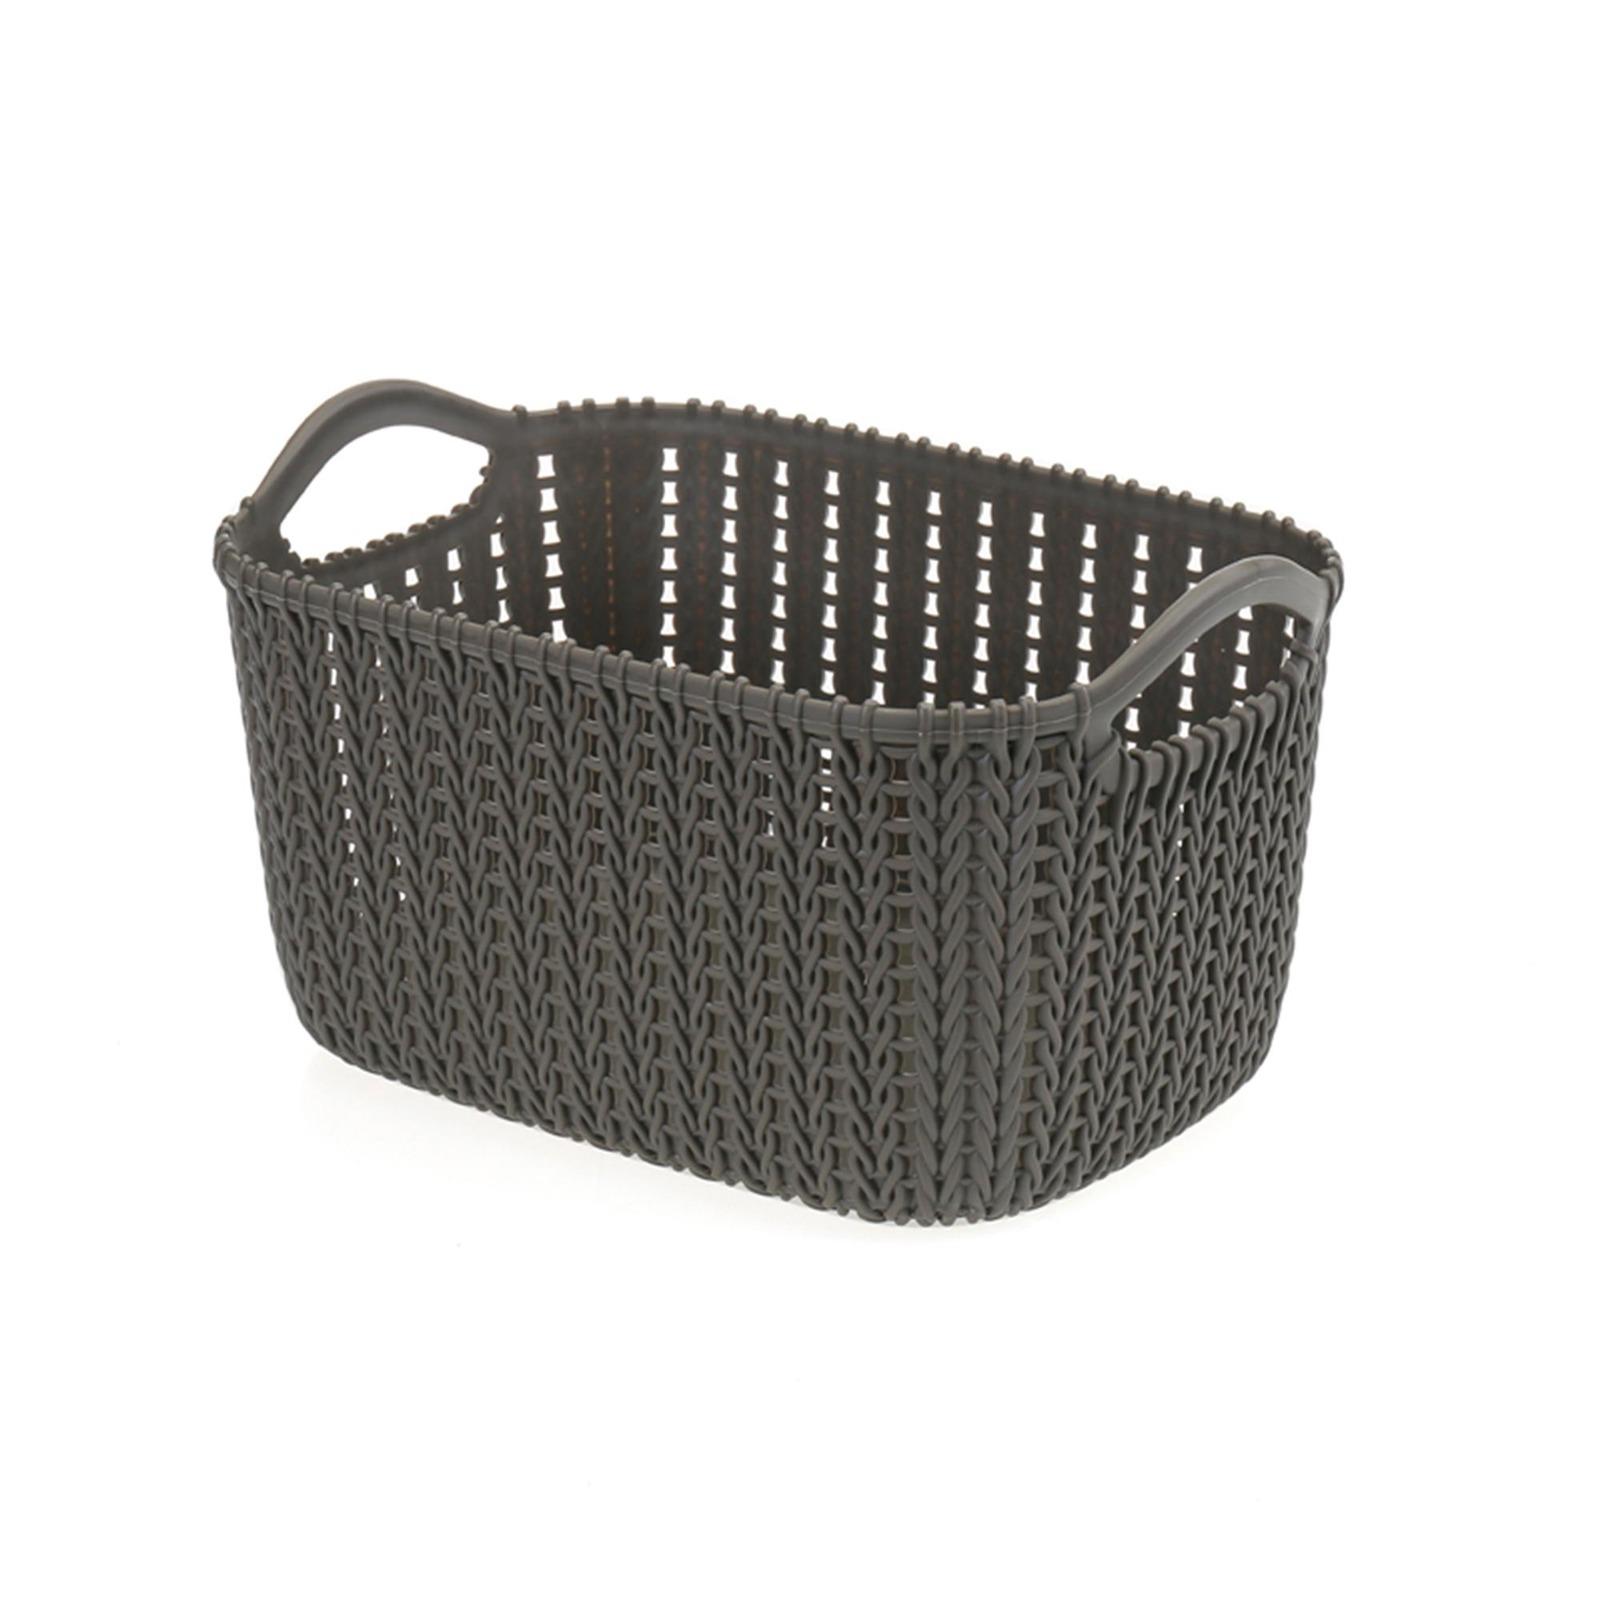 Houze Small Braided Storage Basket With Handle - Coffee